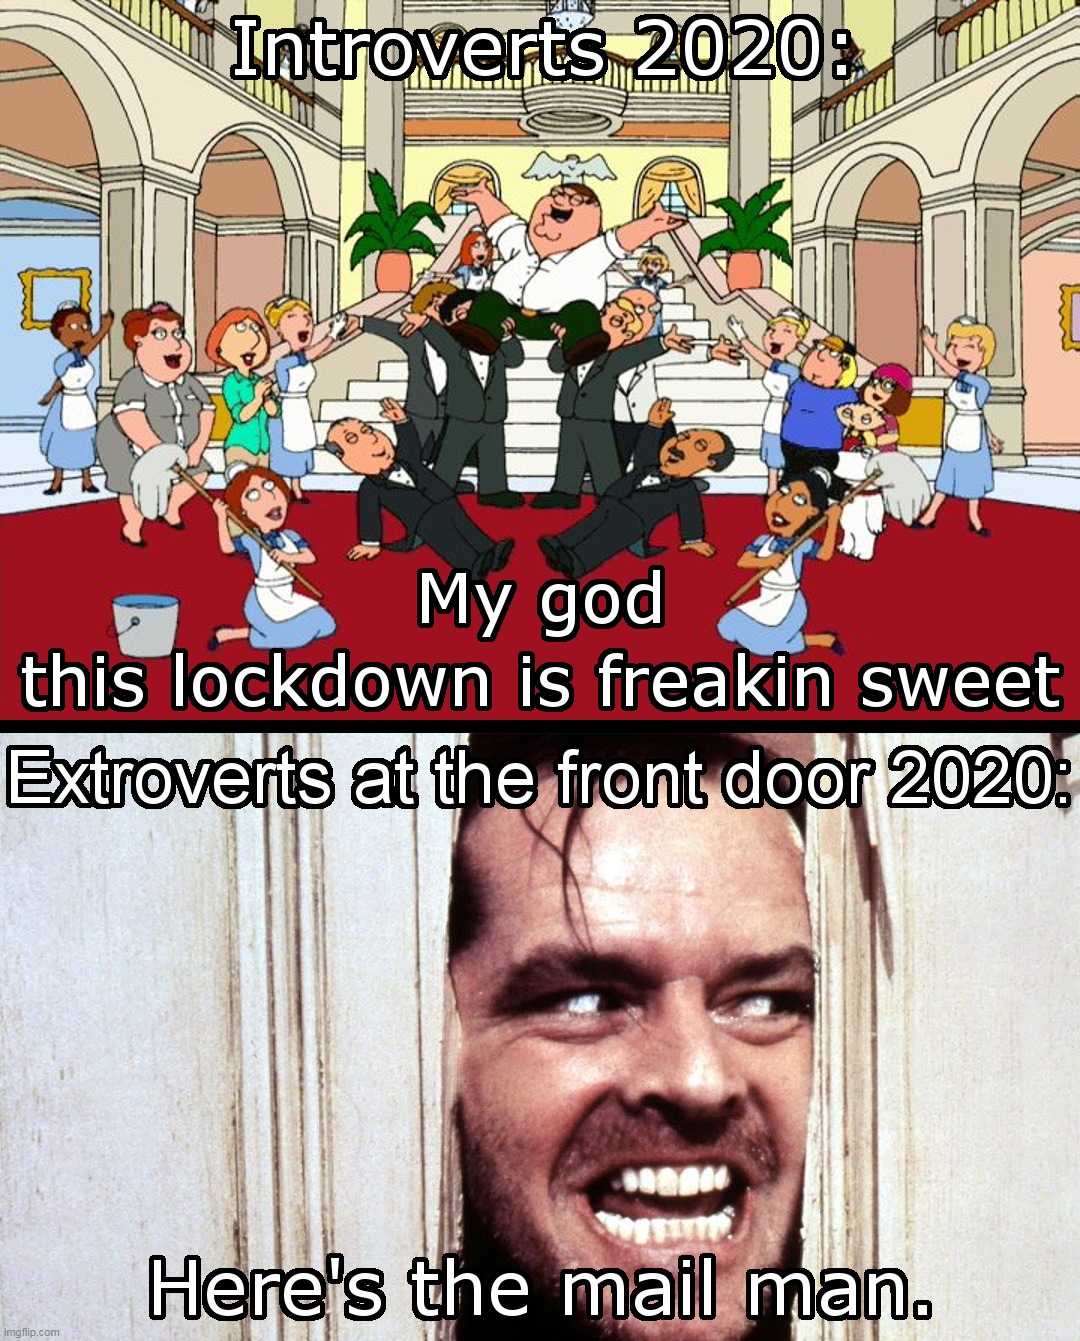 Lock down 2020 be like | image tagged in lockdown | made w/ Imgflip meme maker